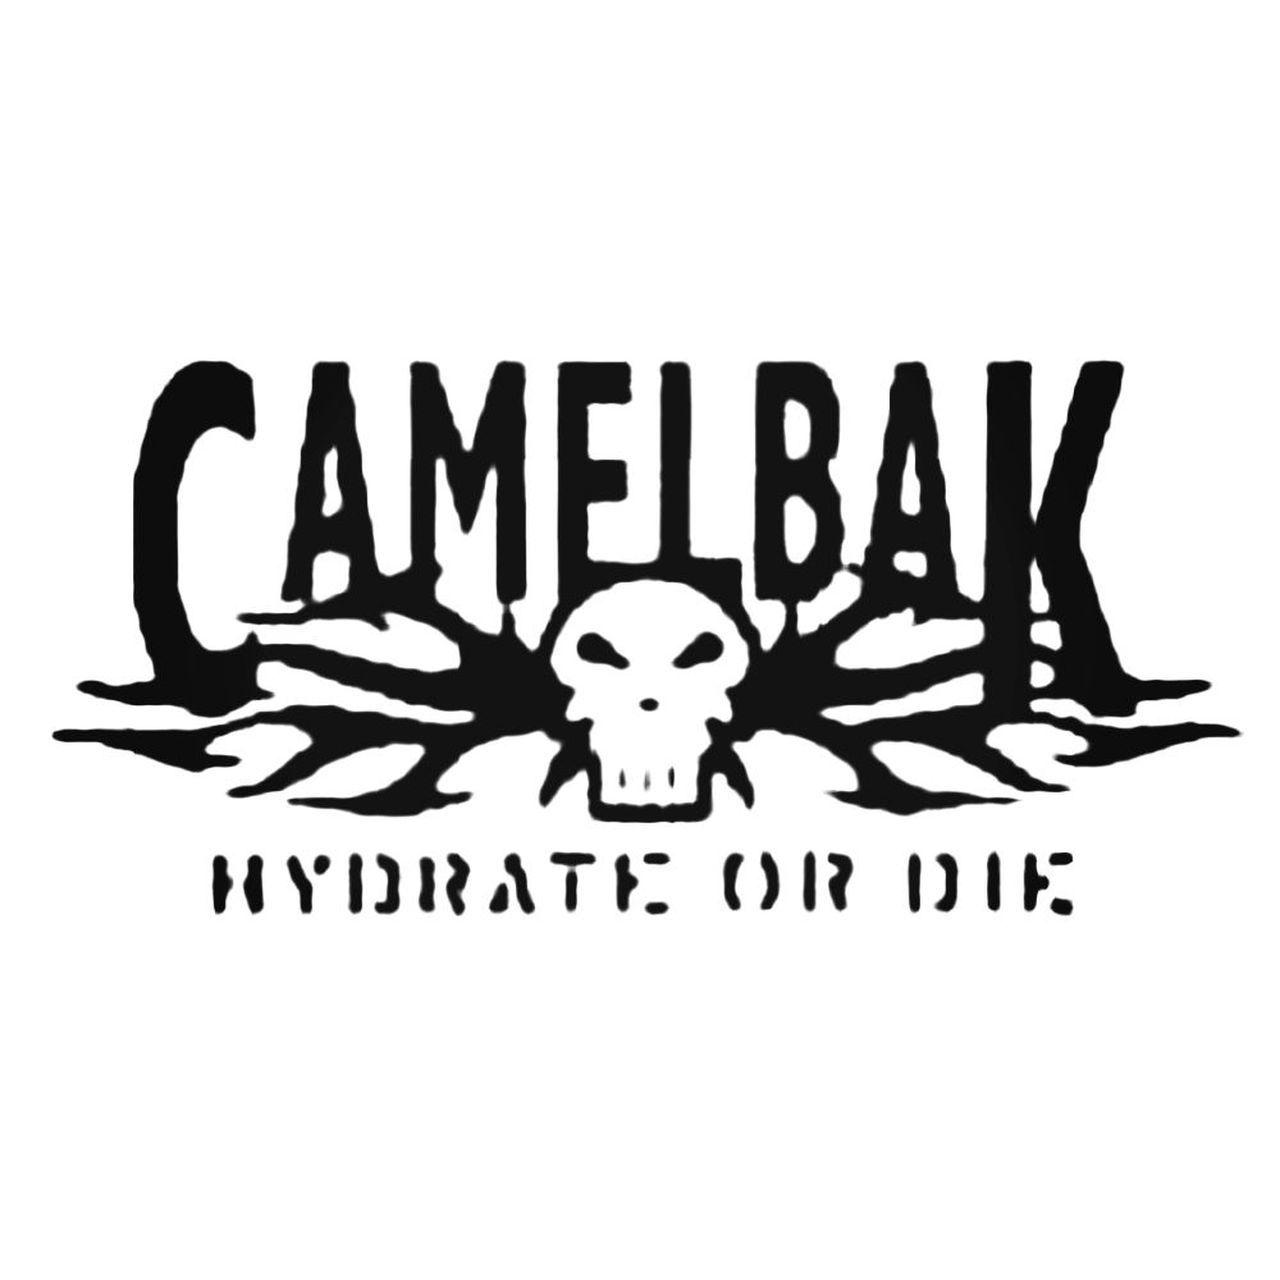 CamelBak Logo - Camelbak Hydrate Or Die Decal Sticker